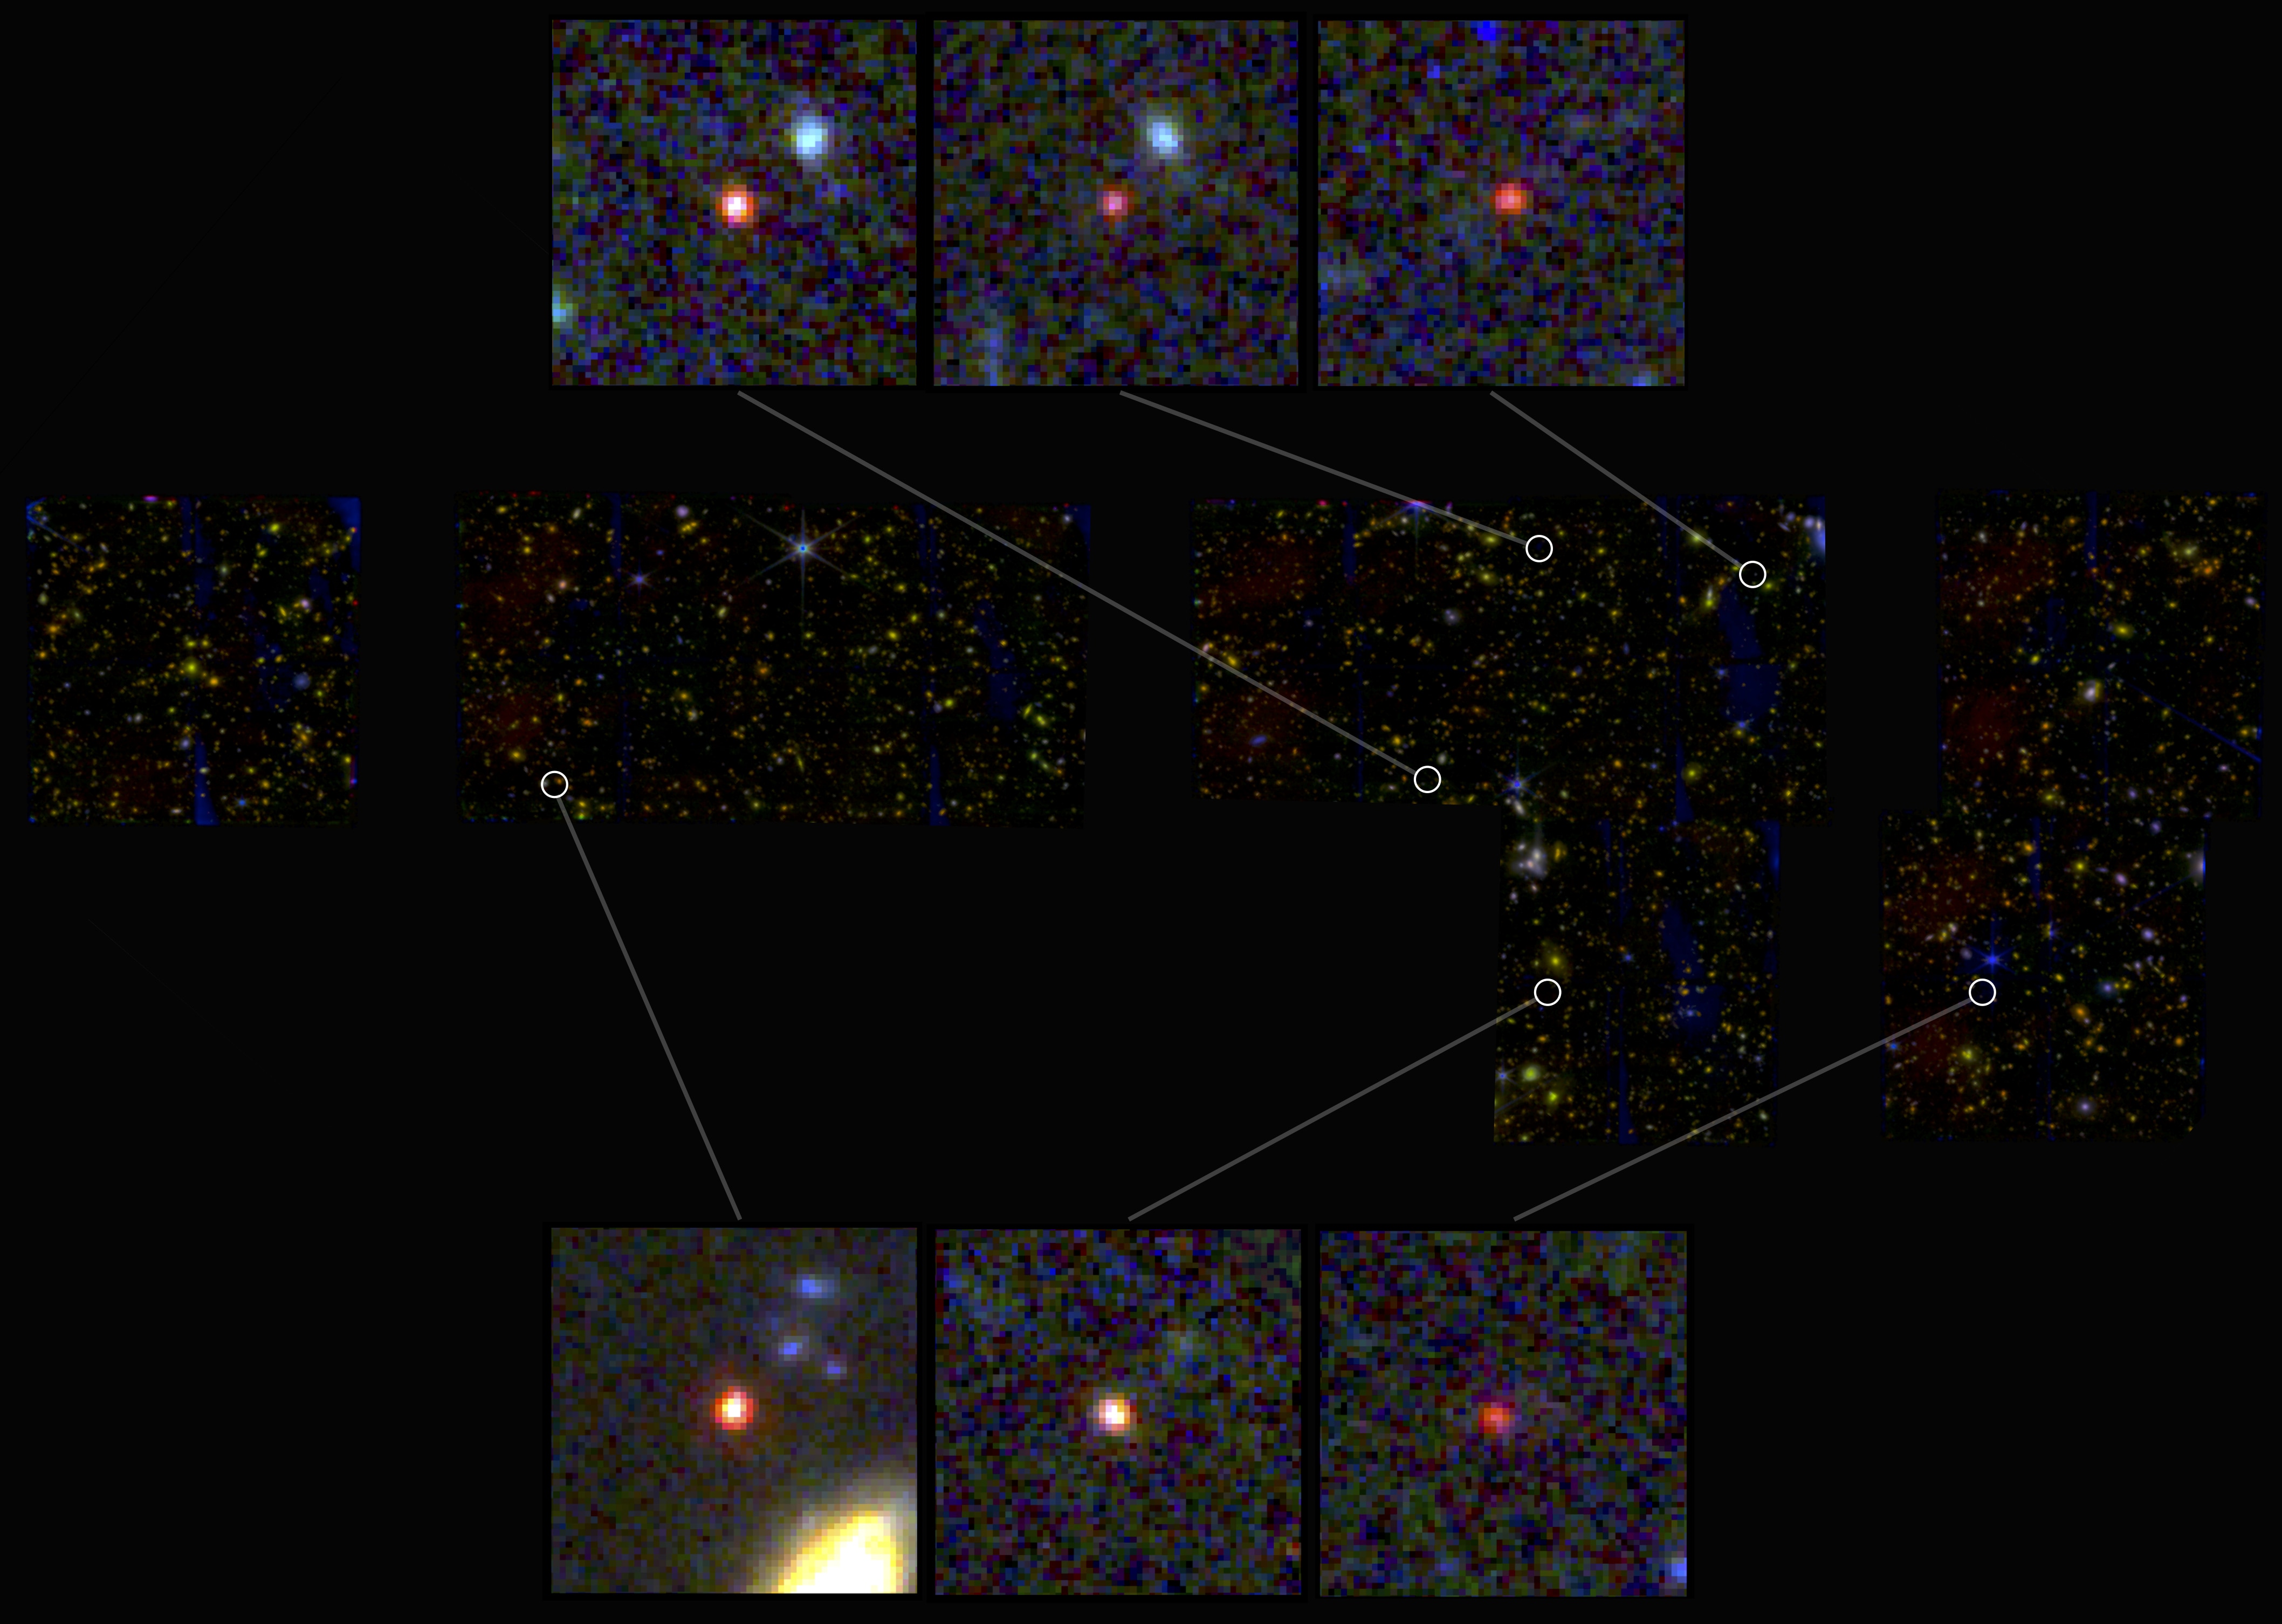 Galaxies and deep field taken by JWST